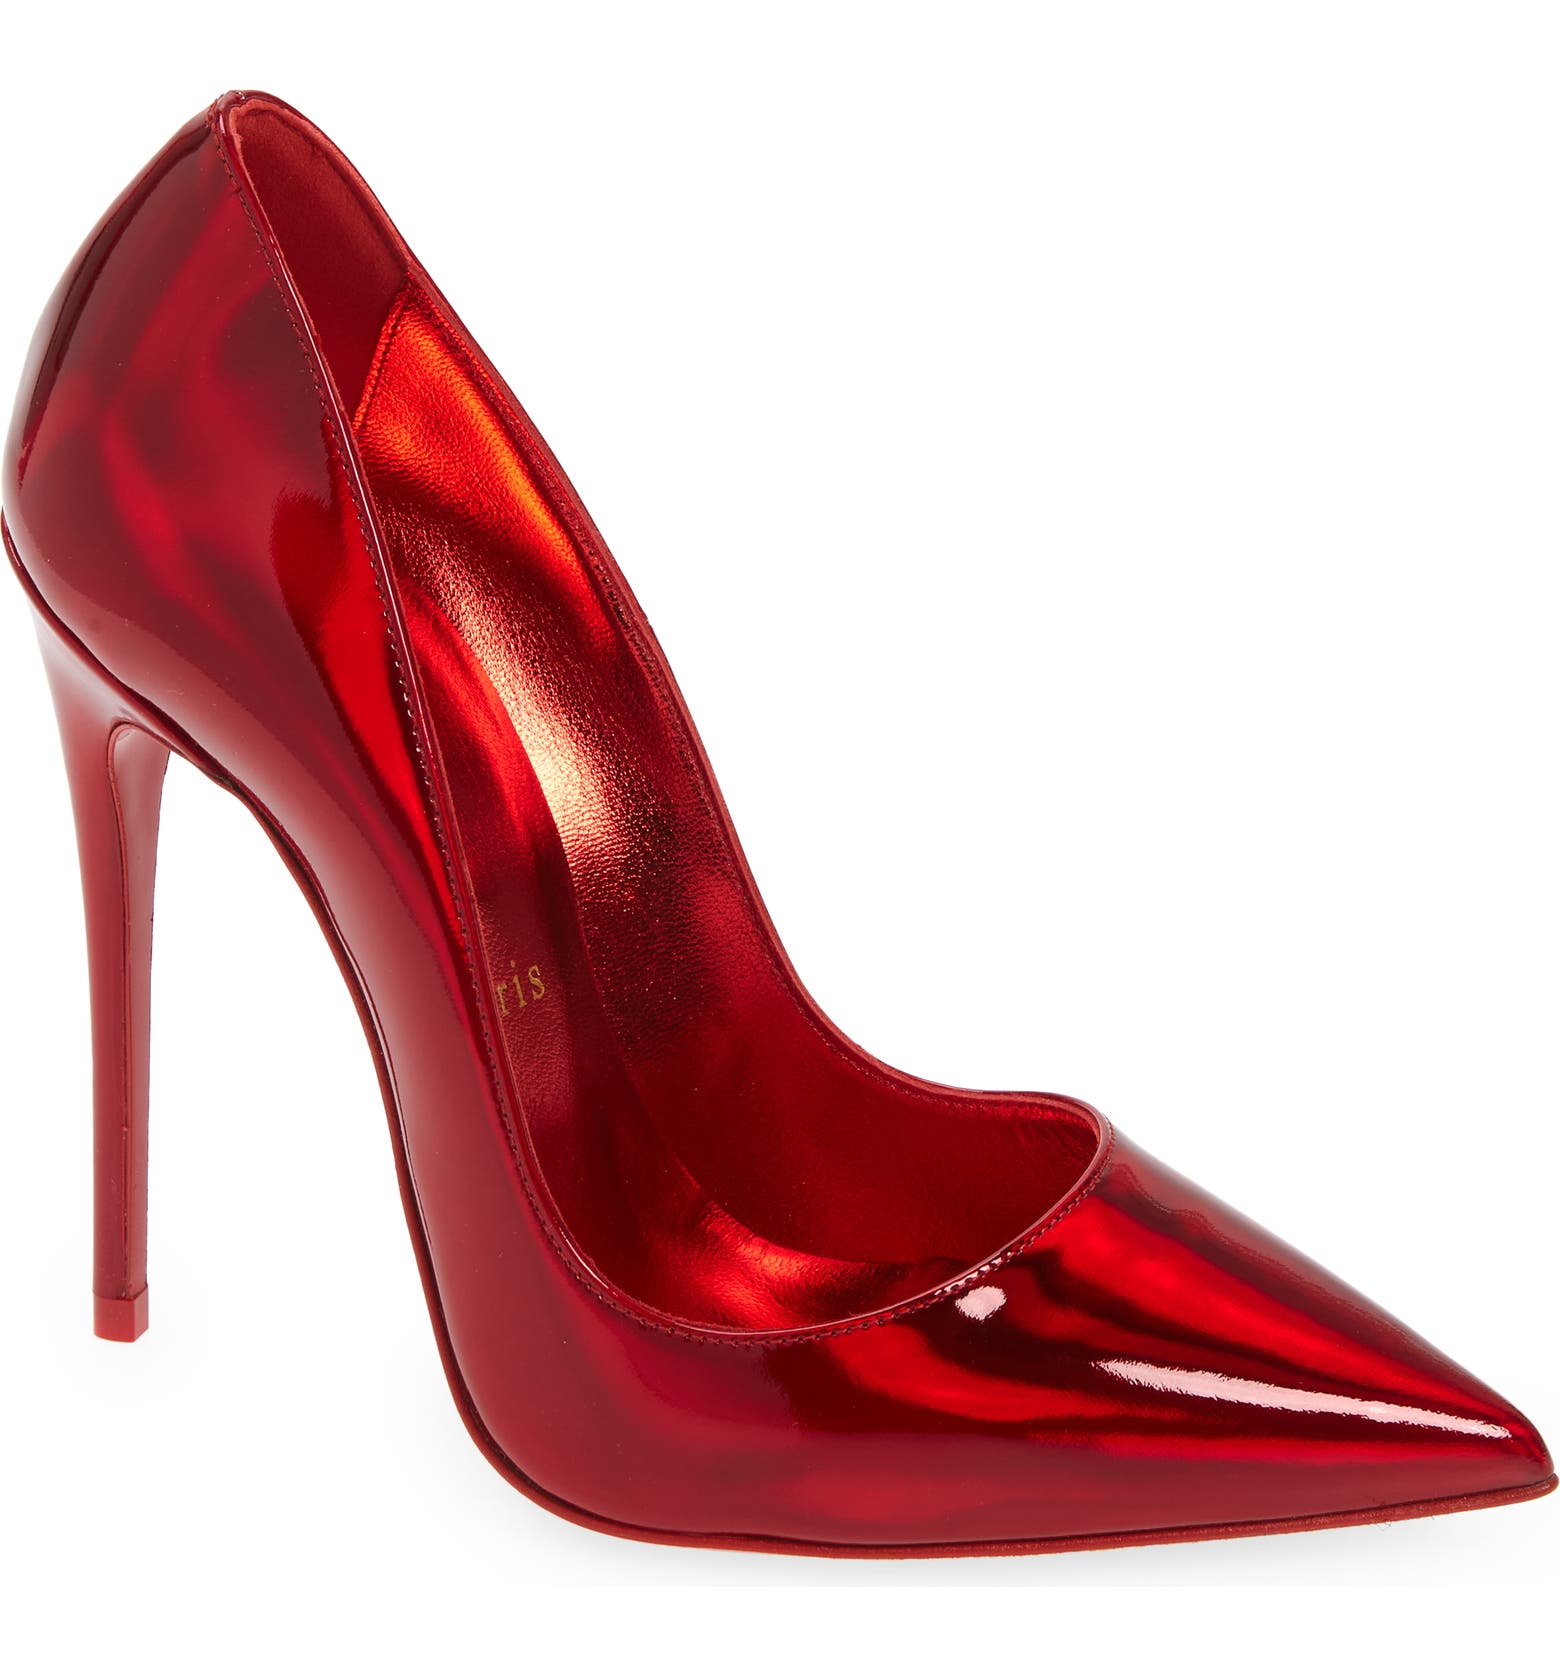 Red metallic stiletto heels